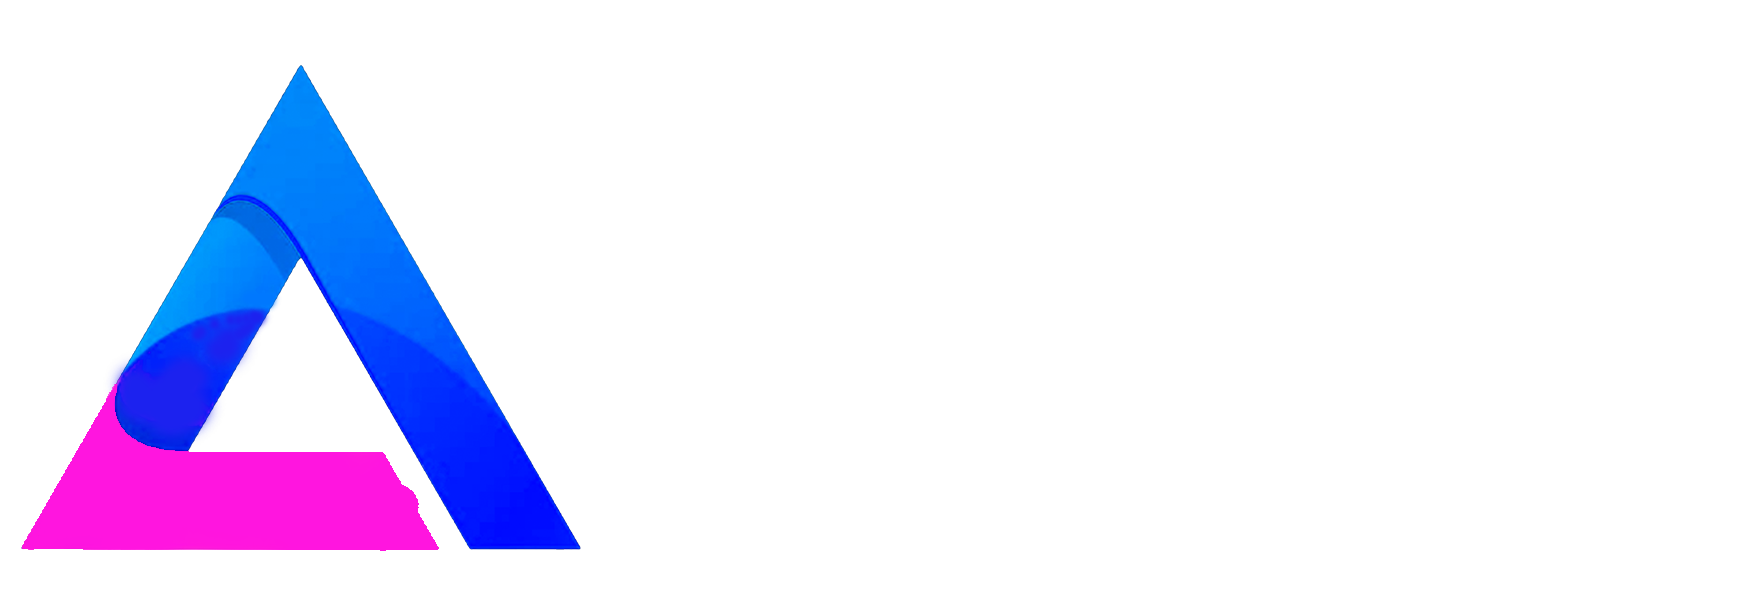 Play Hd Entretenimento